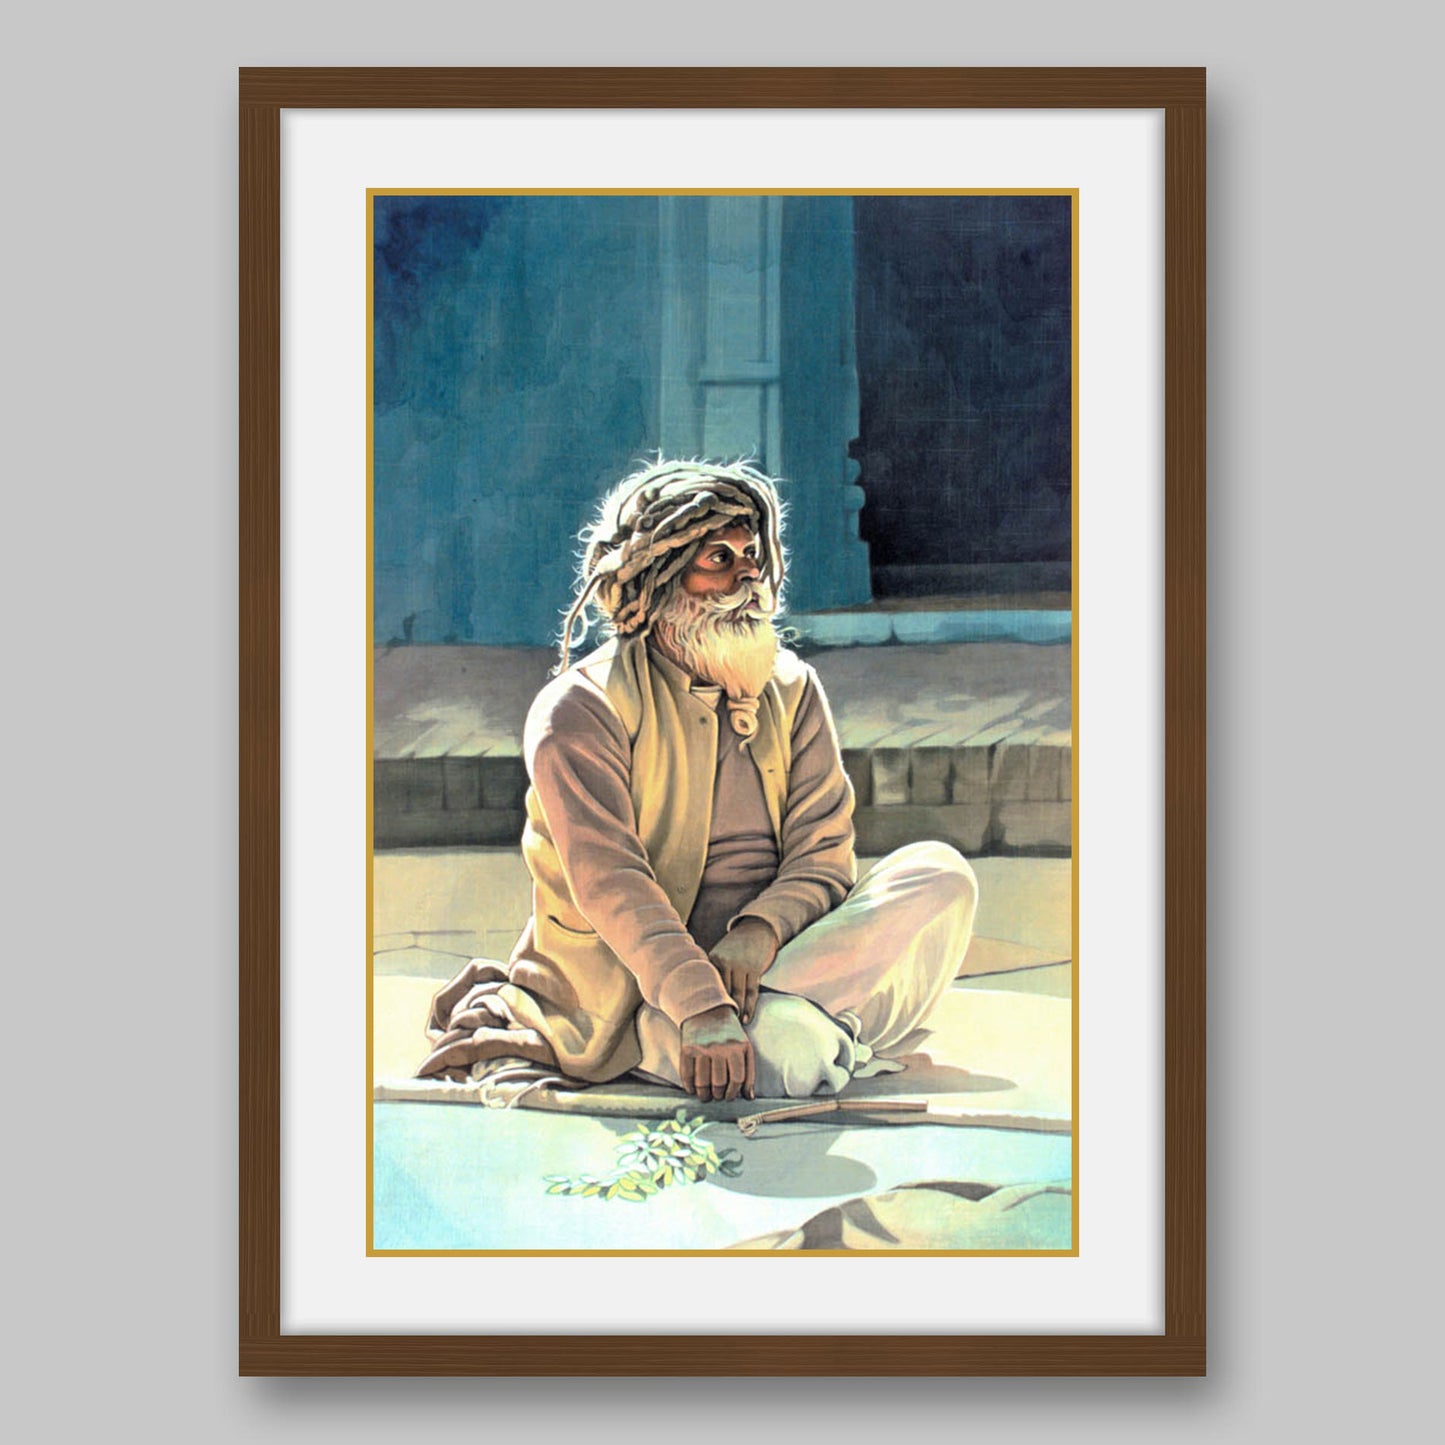 Sadhu With Dreadlocks - High Quality Print of Artwork by Pieter Weltevrede